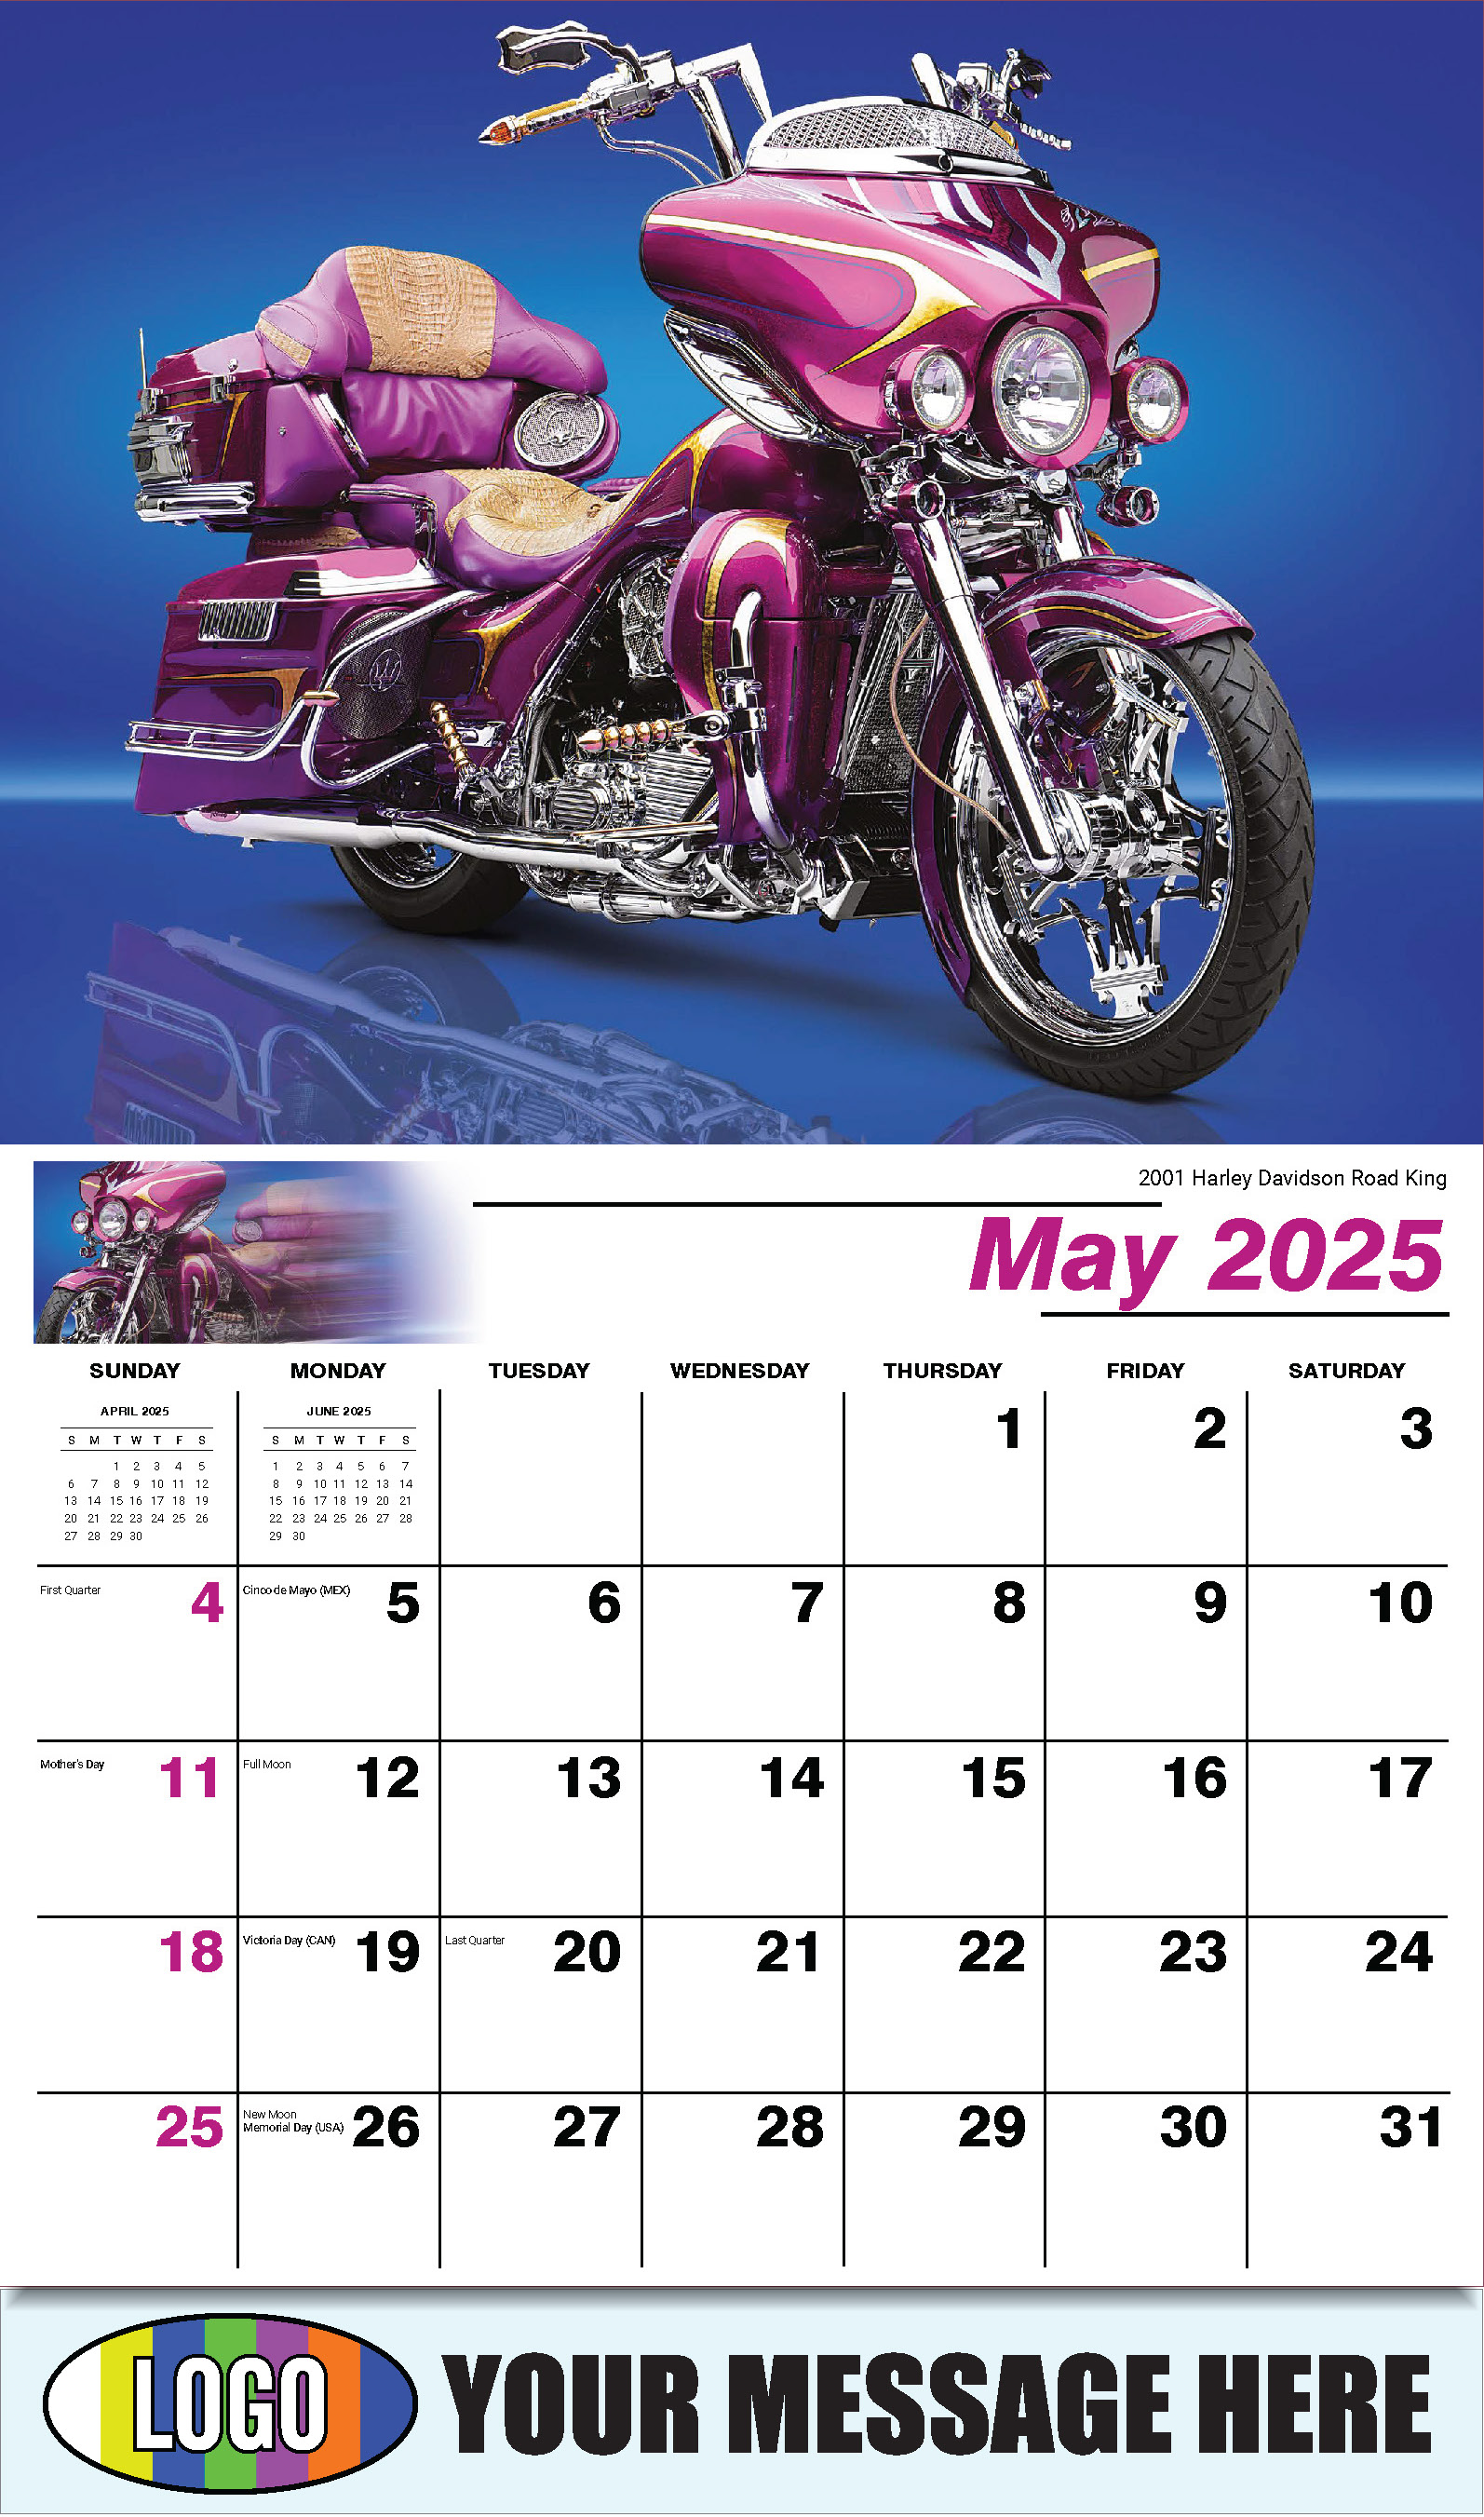 Motorcycle Mania 2025 Automotve Business Advertising Wall Calendar - May